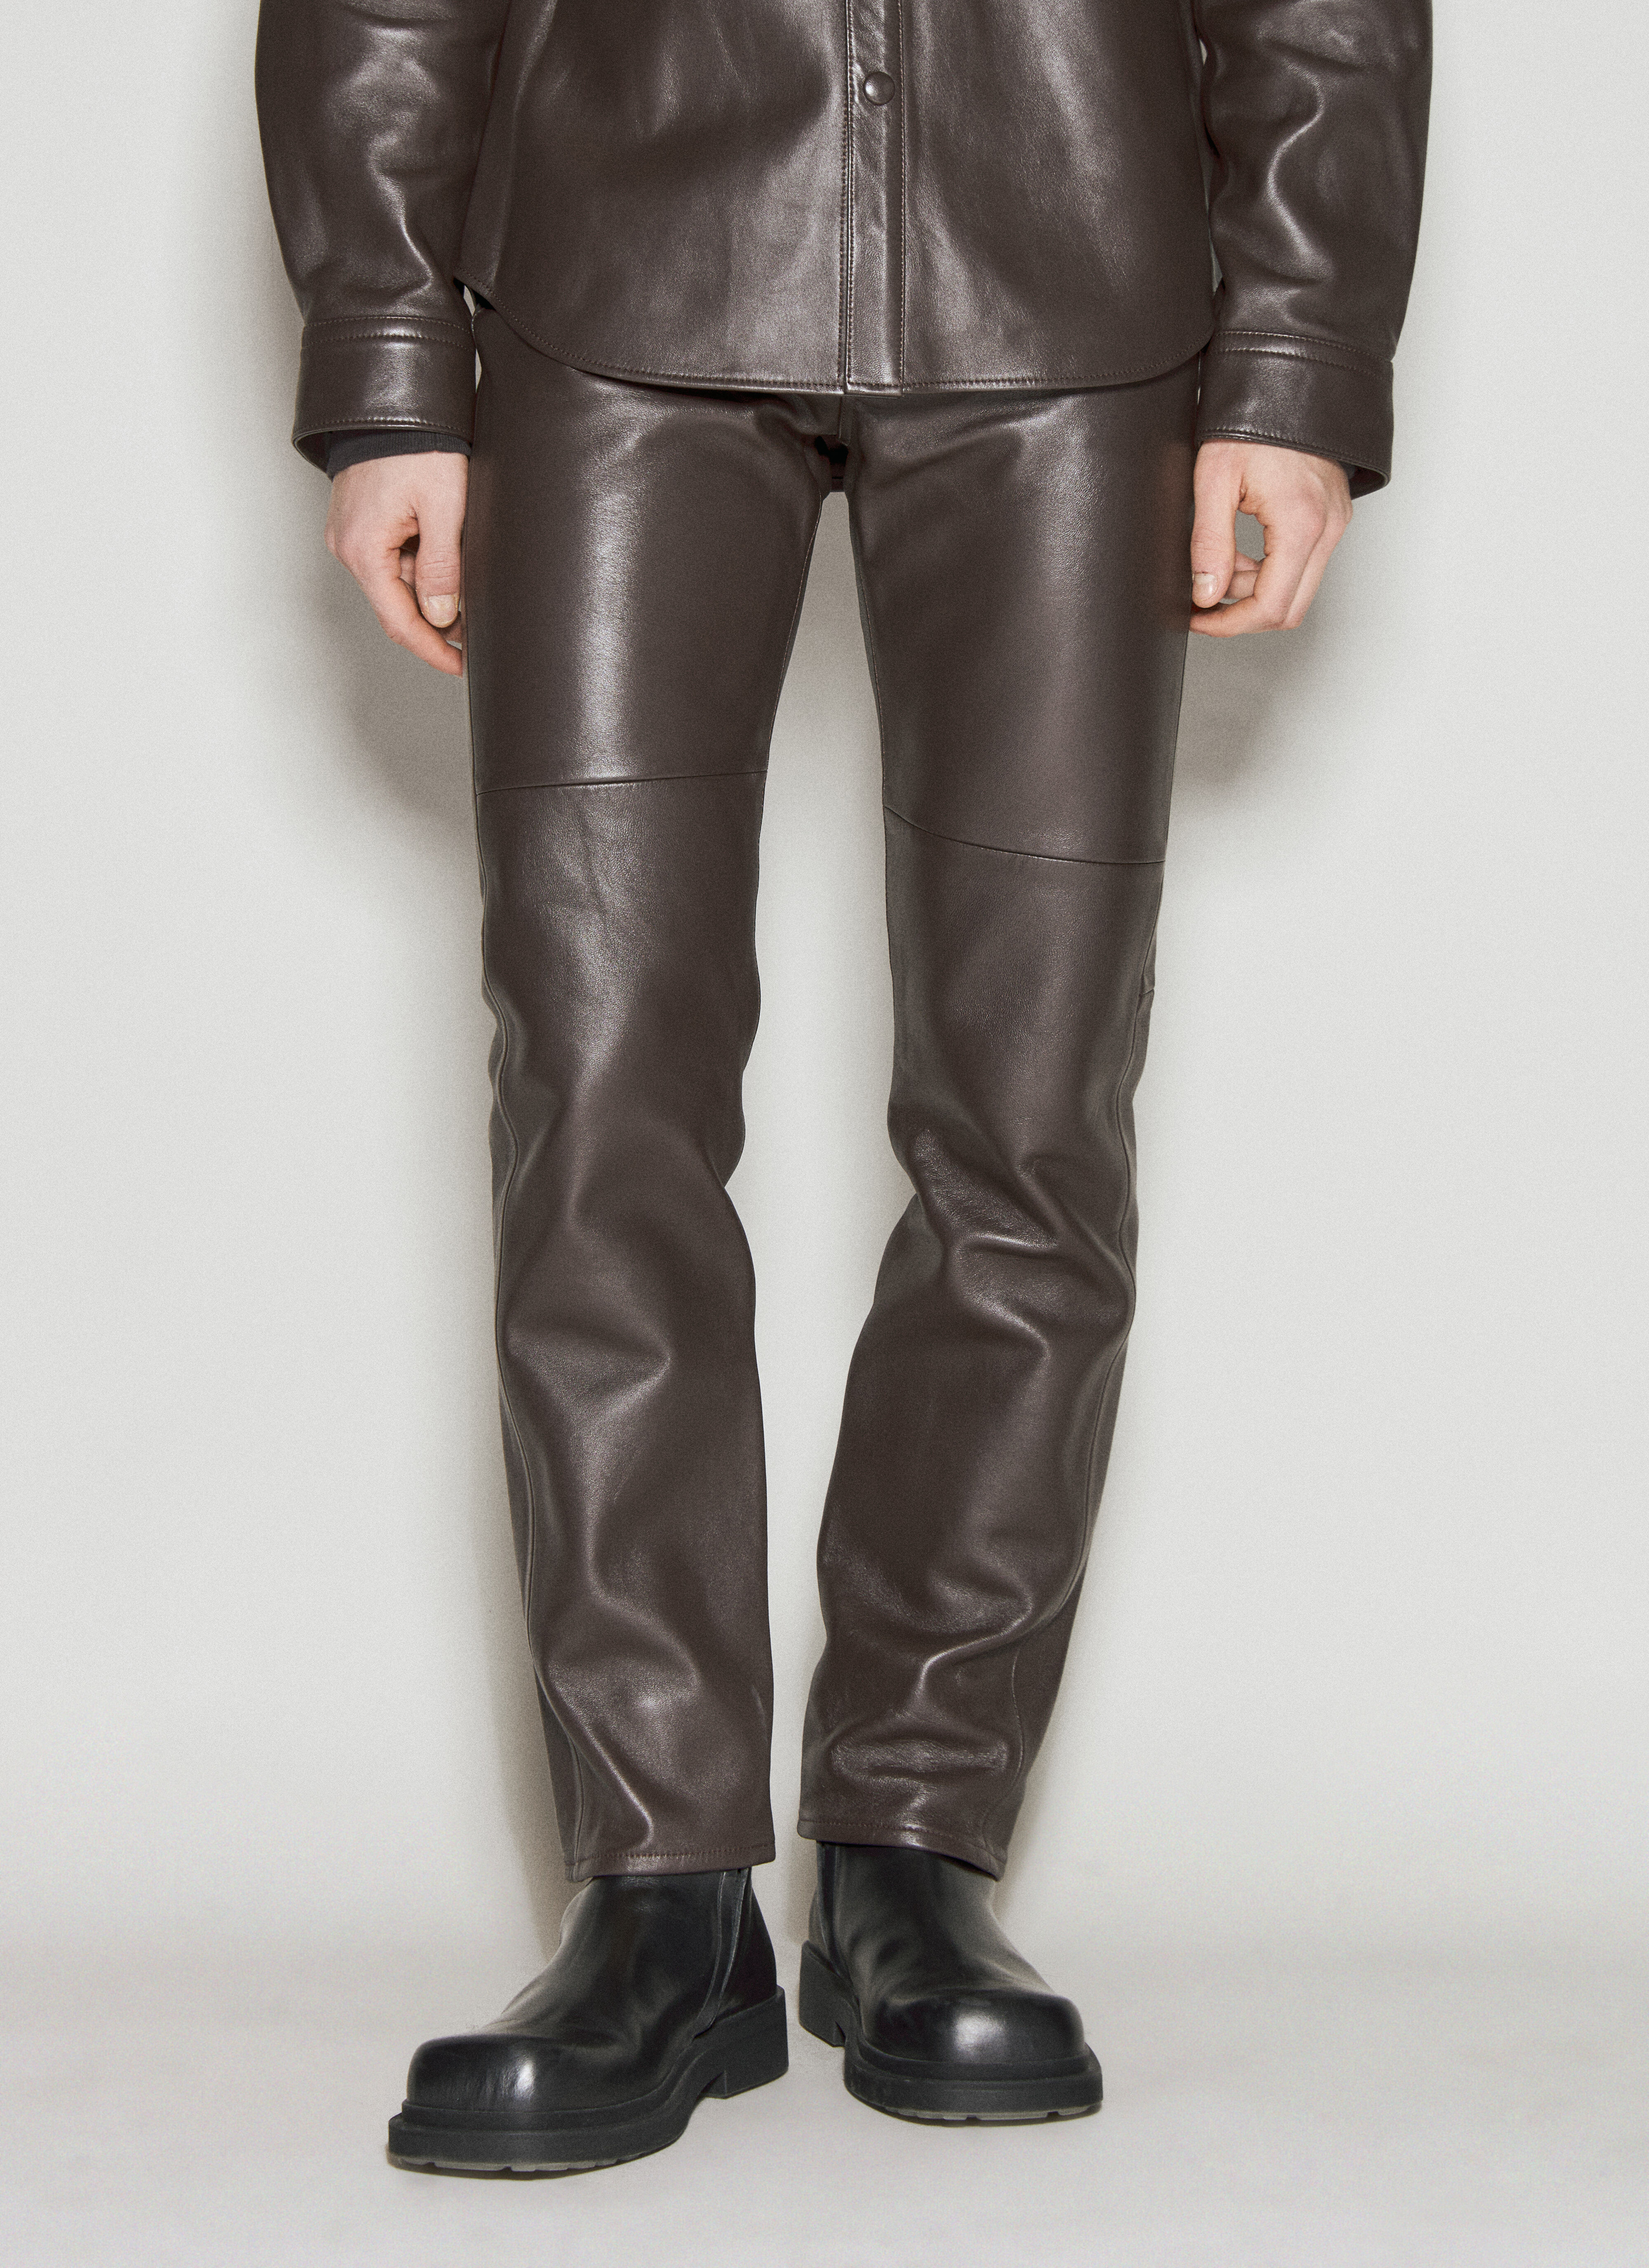 Balmain x Acne Studios Leather Pants Black bln0153010